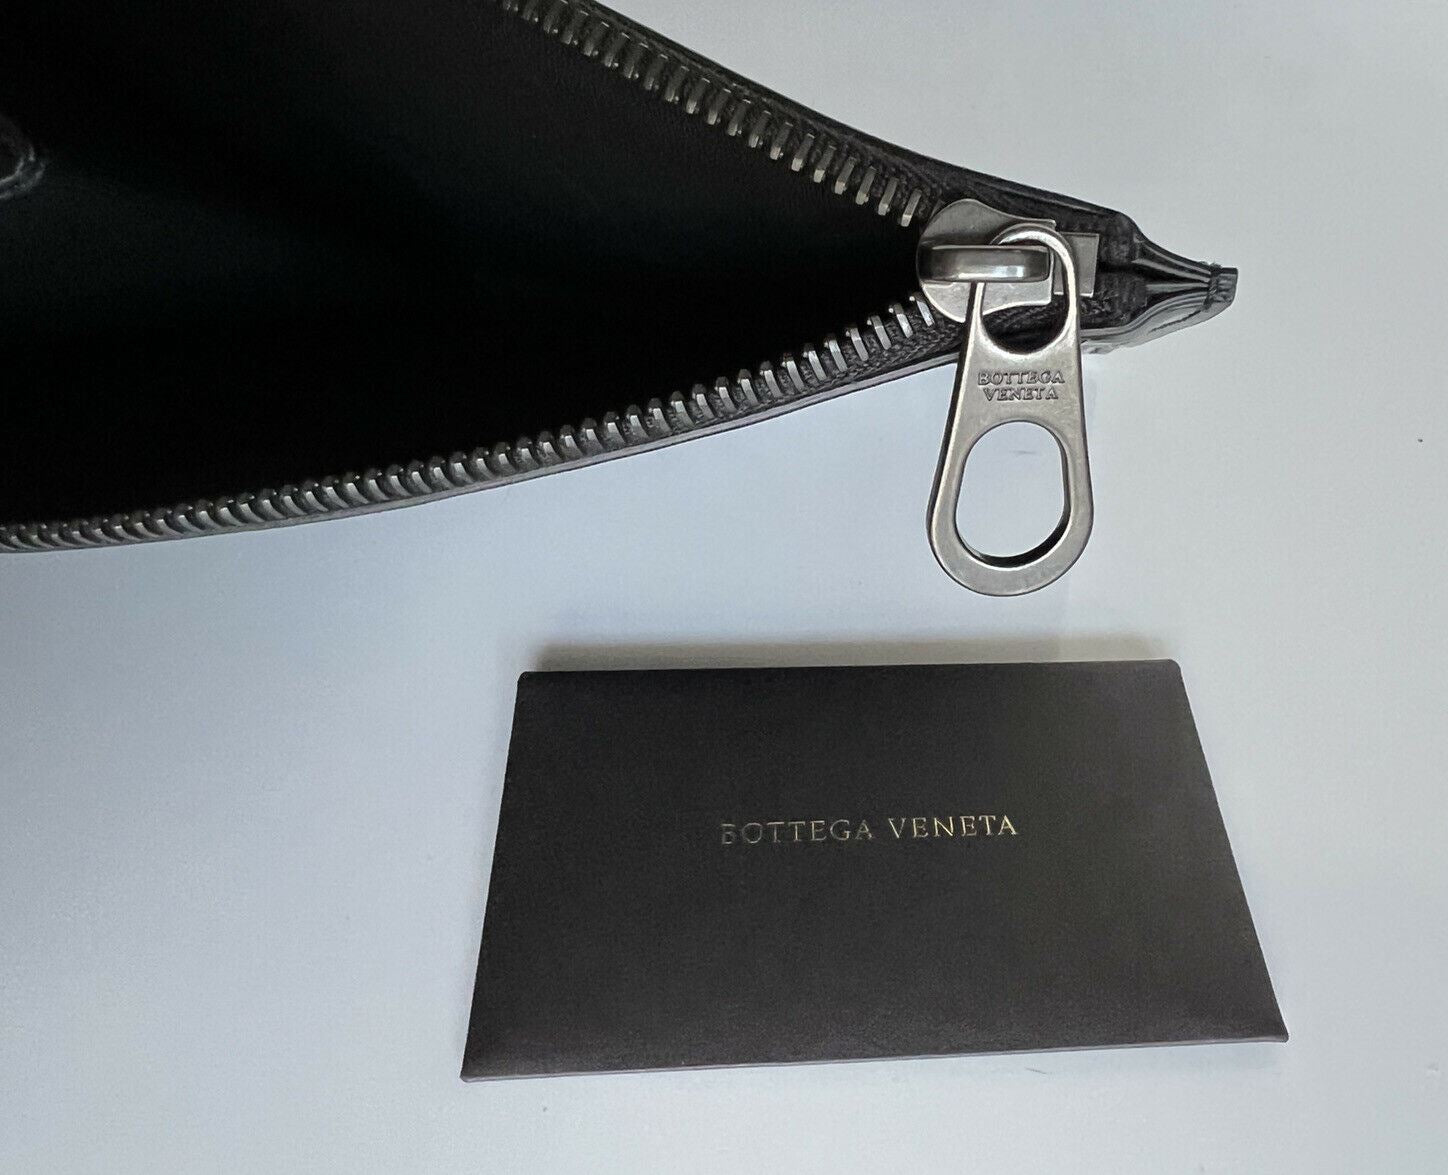 NWT $940 Bottega Veneta Men's Metal Brush Calf Leather Case Black/Silver 506323